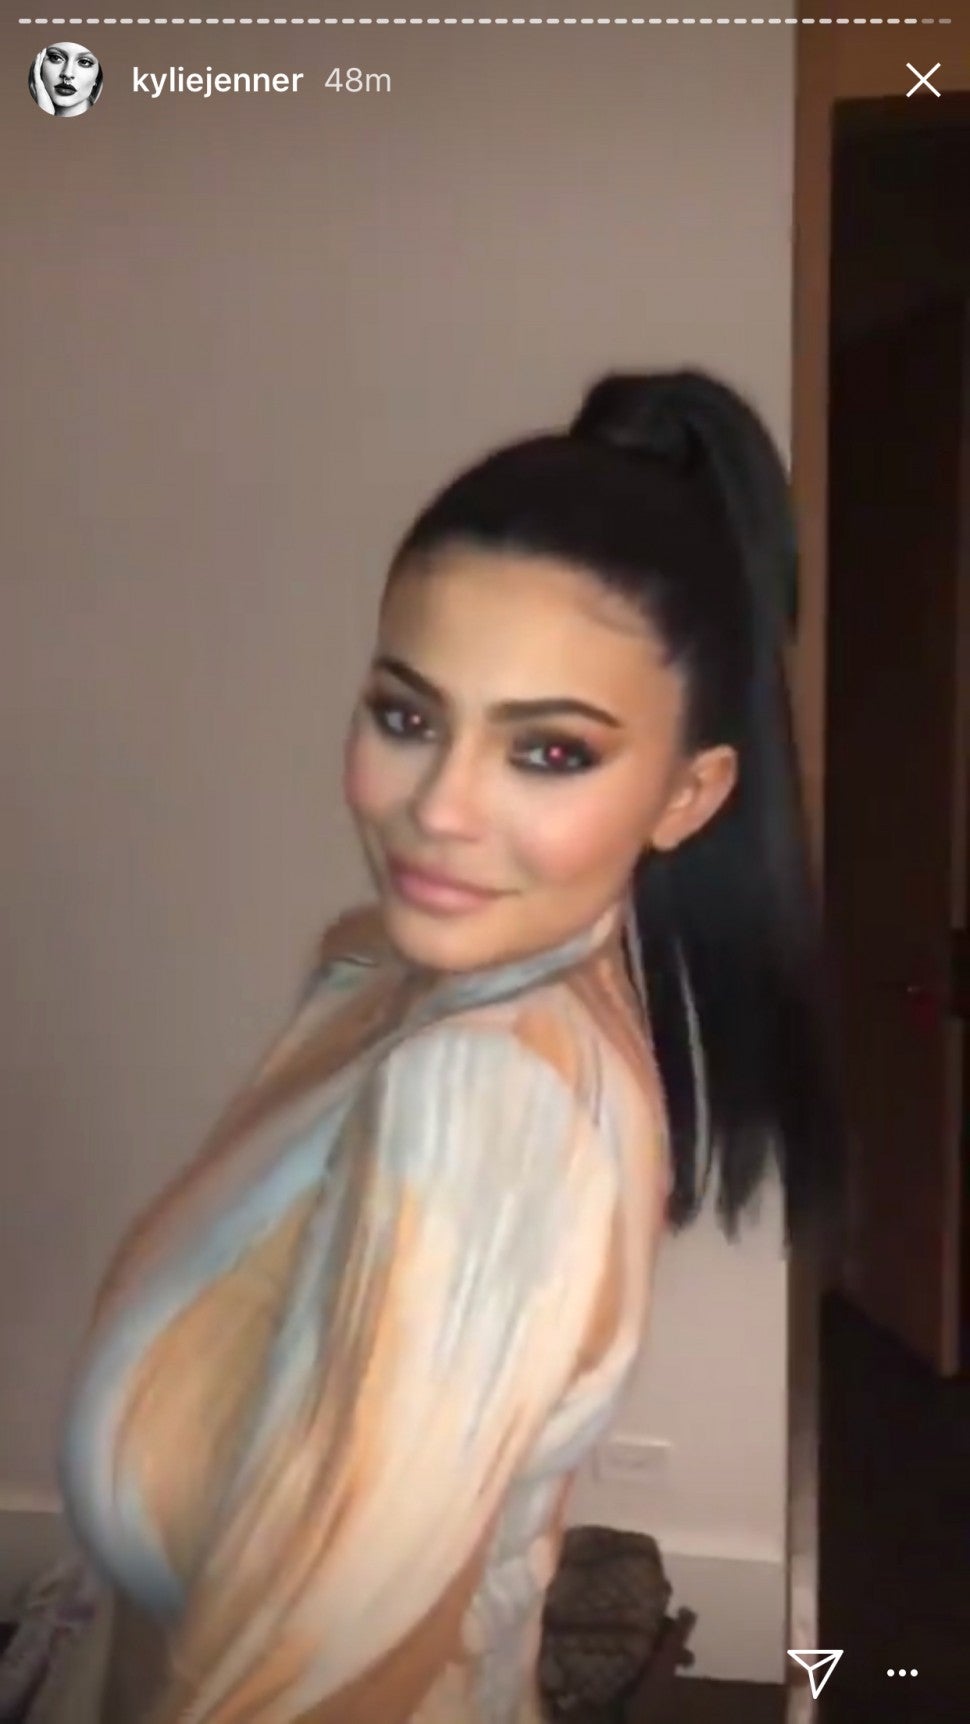 Kylie Jenner posts on IG before dinner